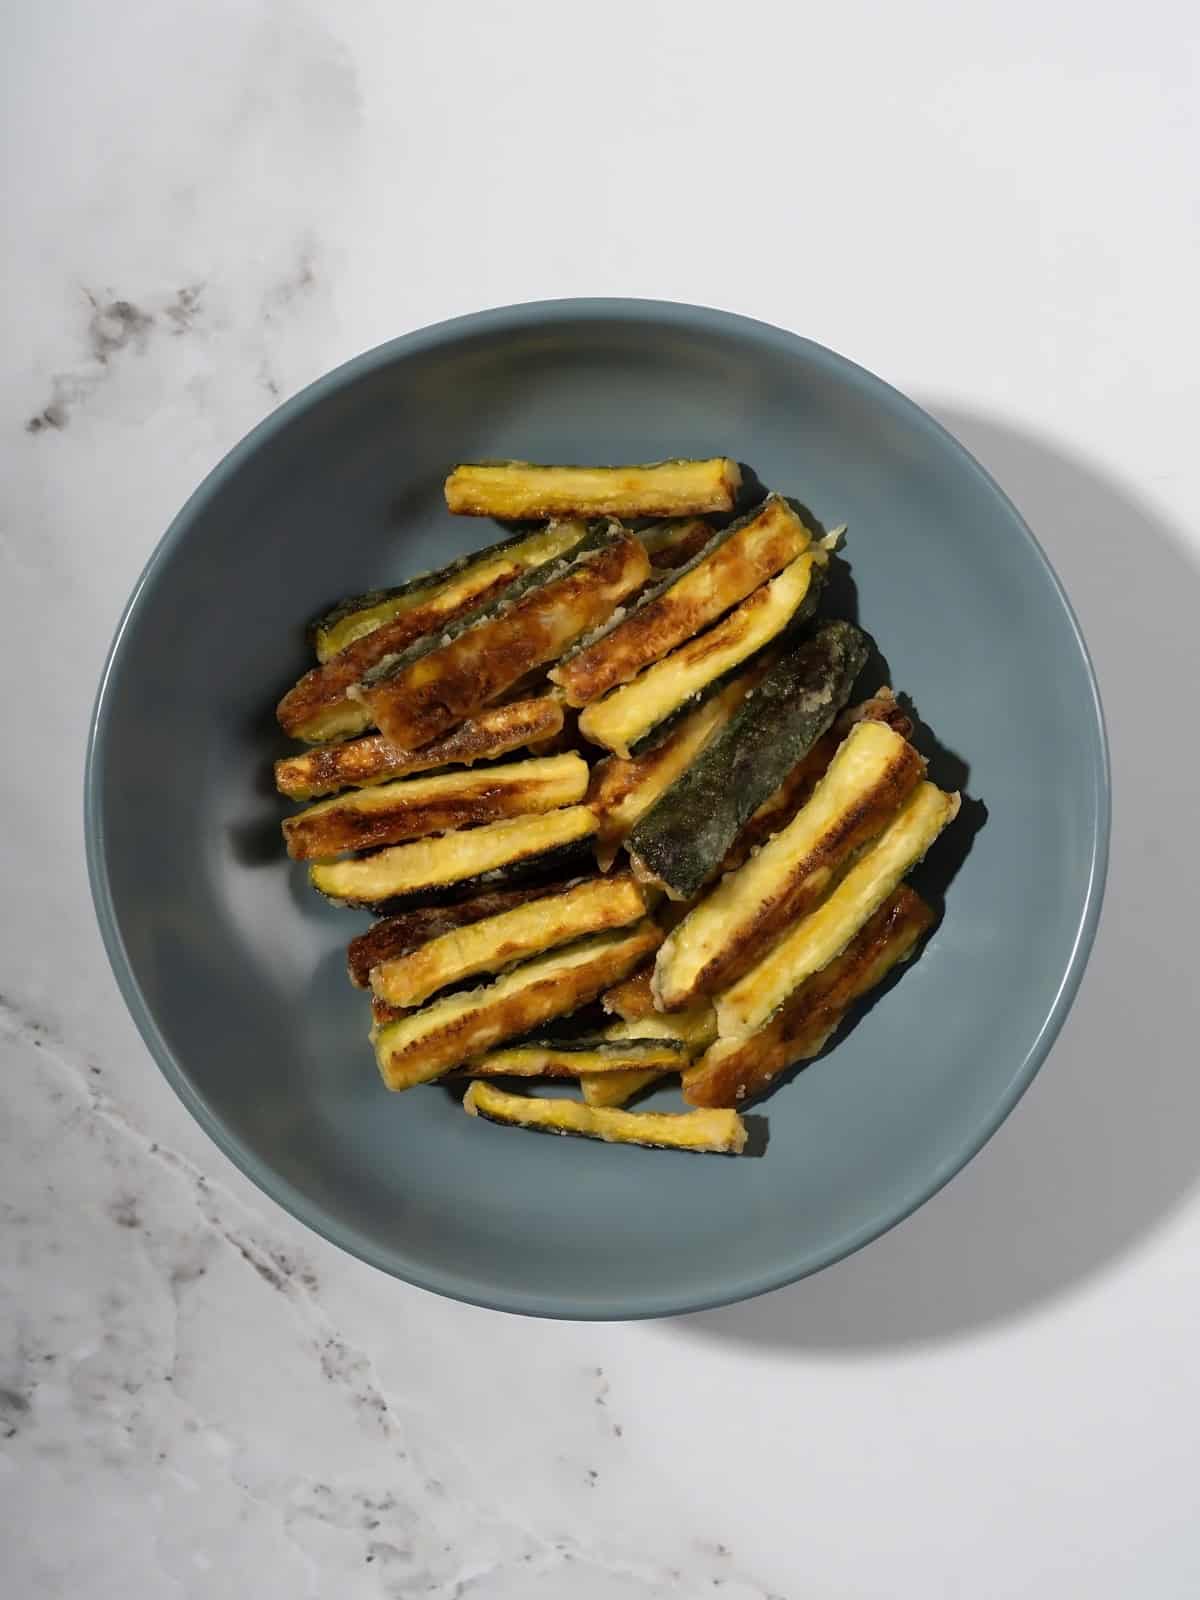 Crispy golden brown zucchini fries in a bowl.